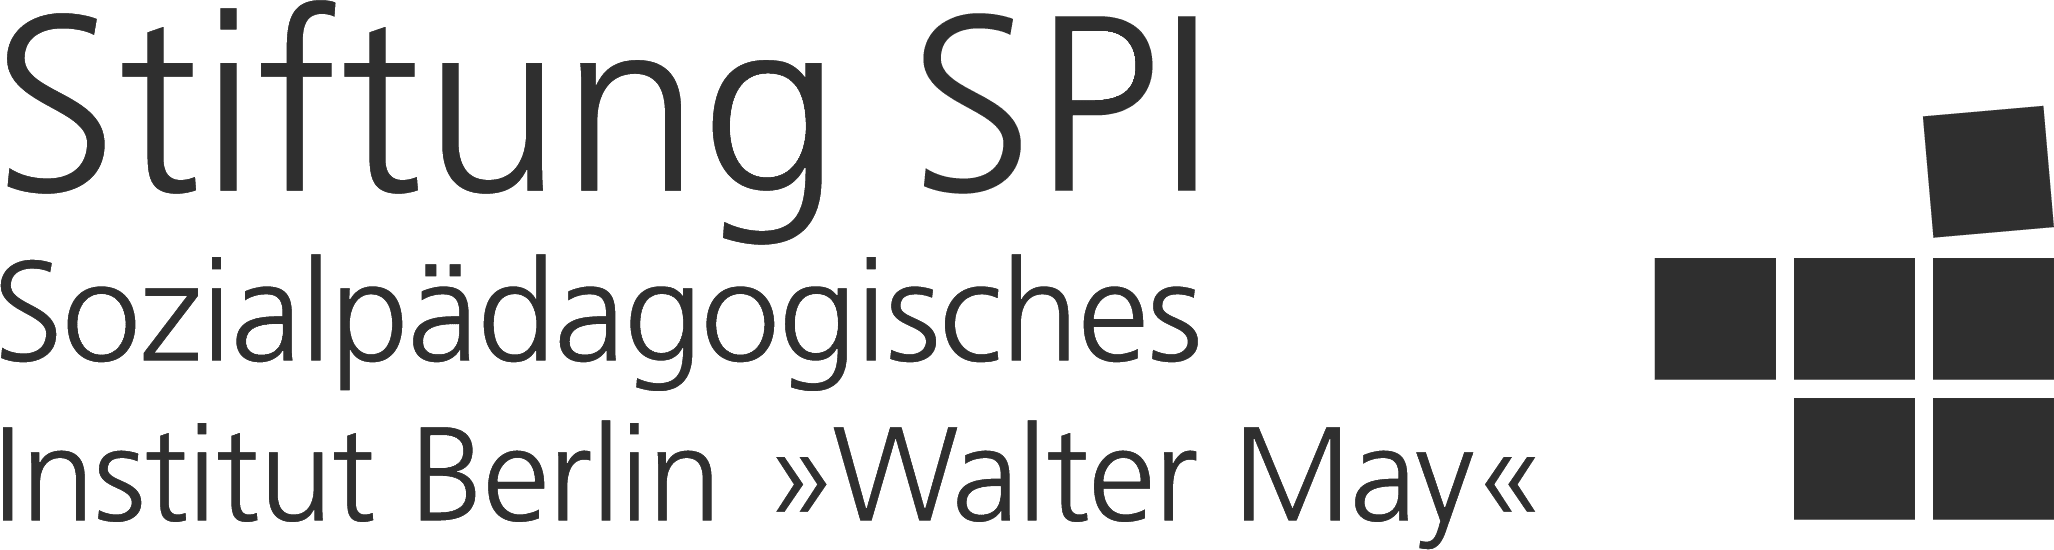 Stiftung SPI-logo